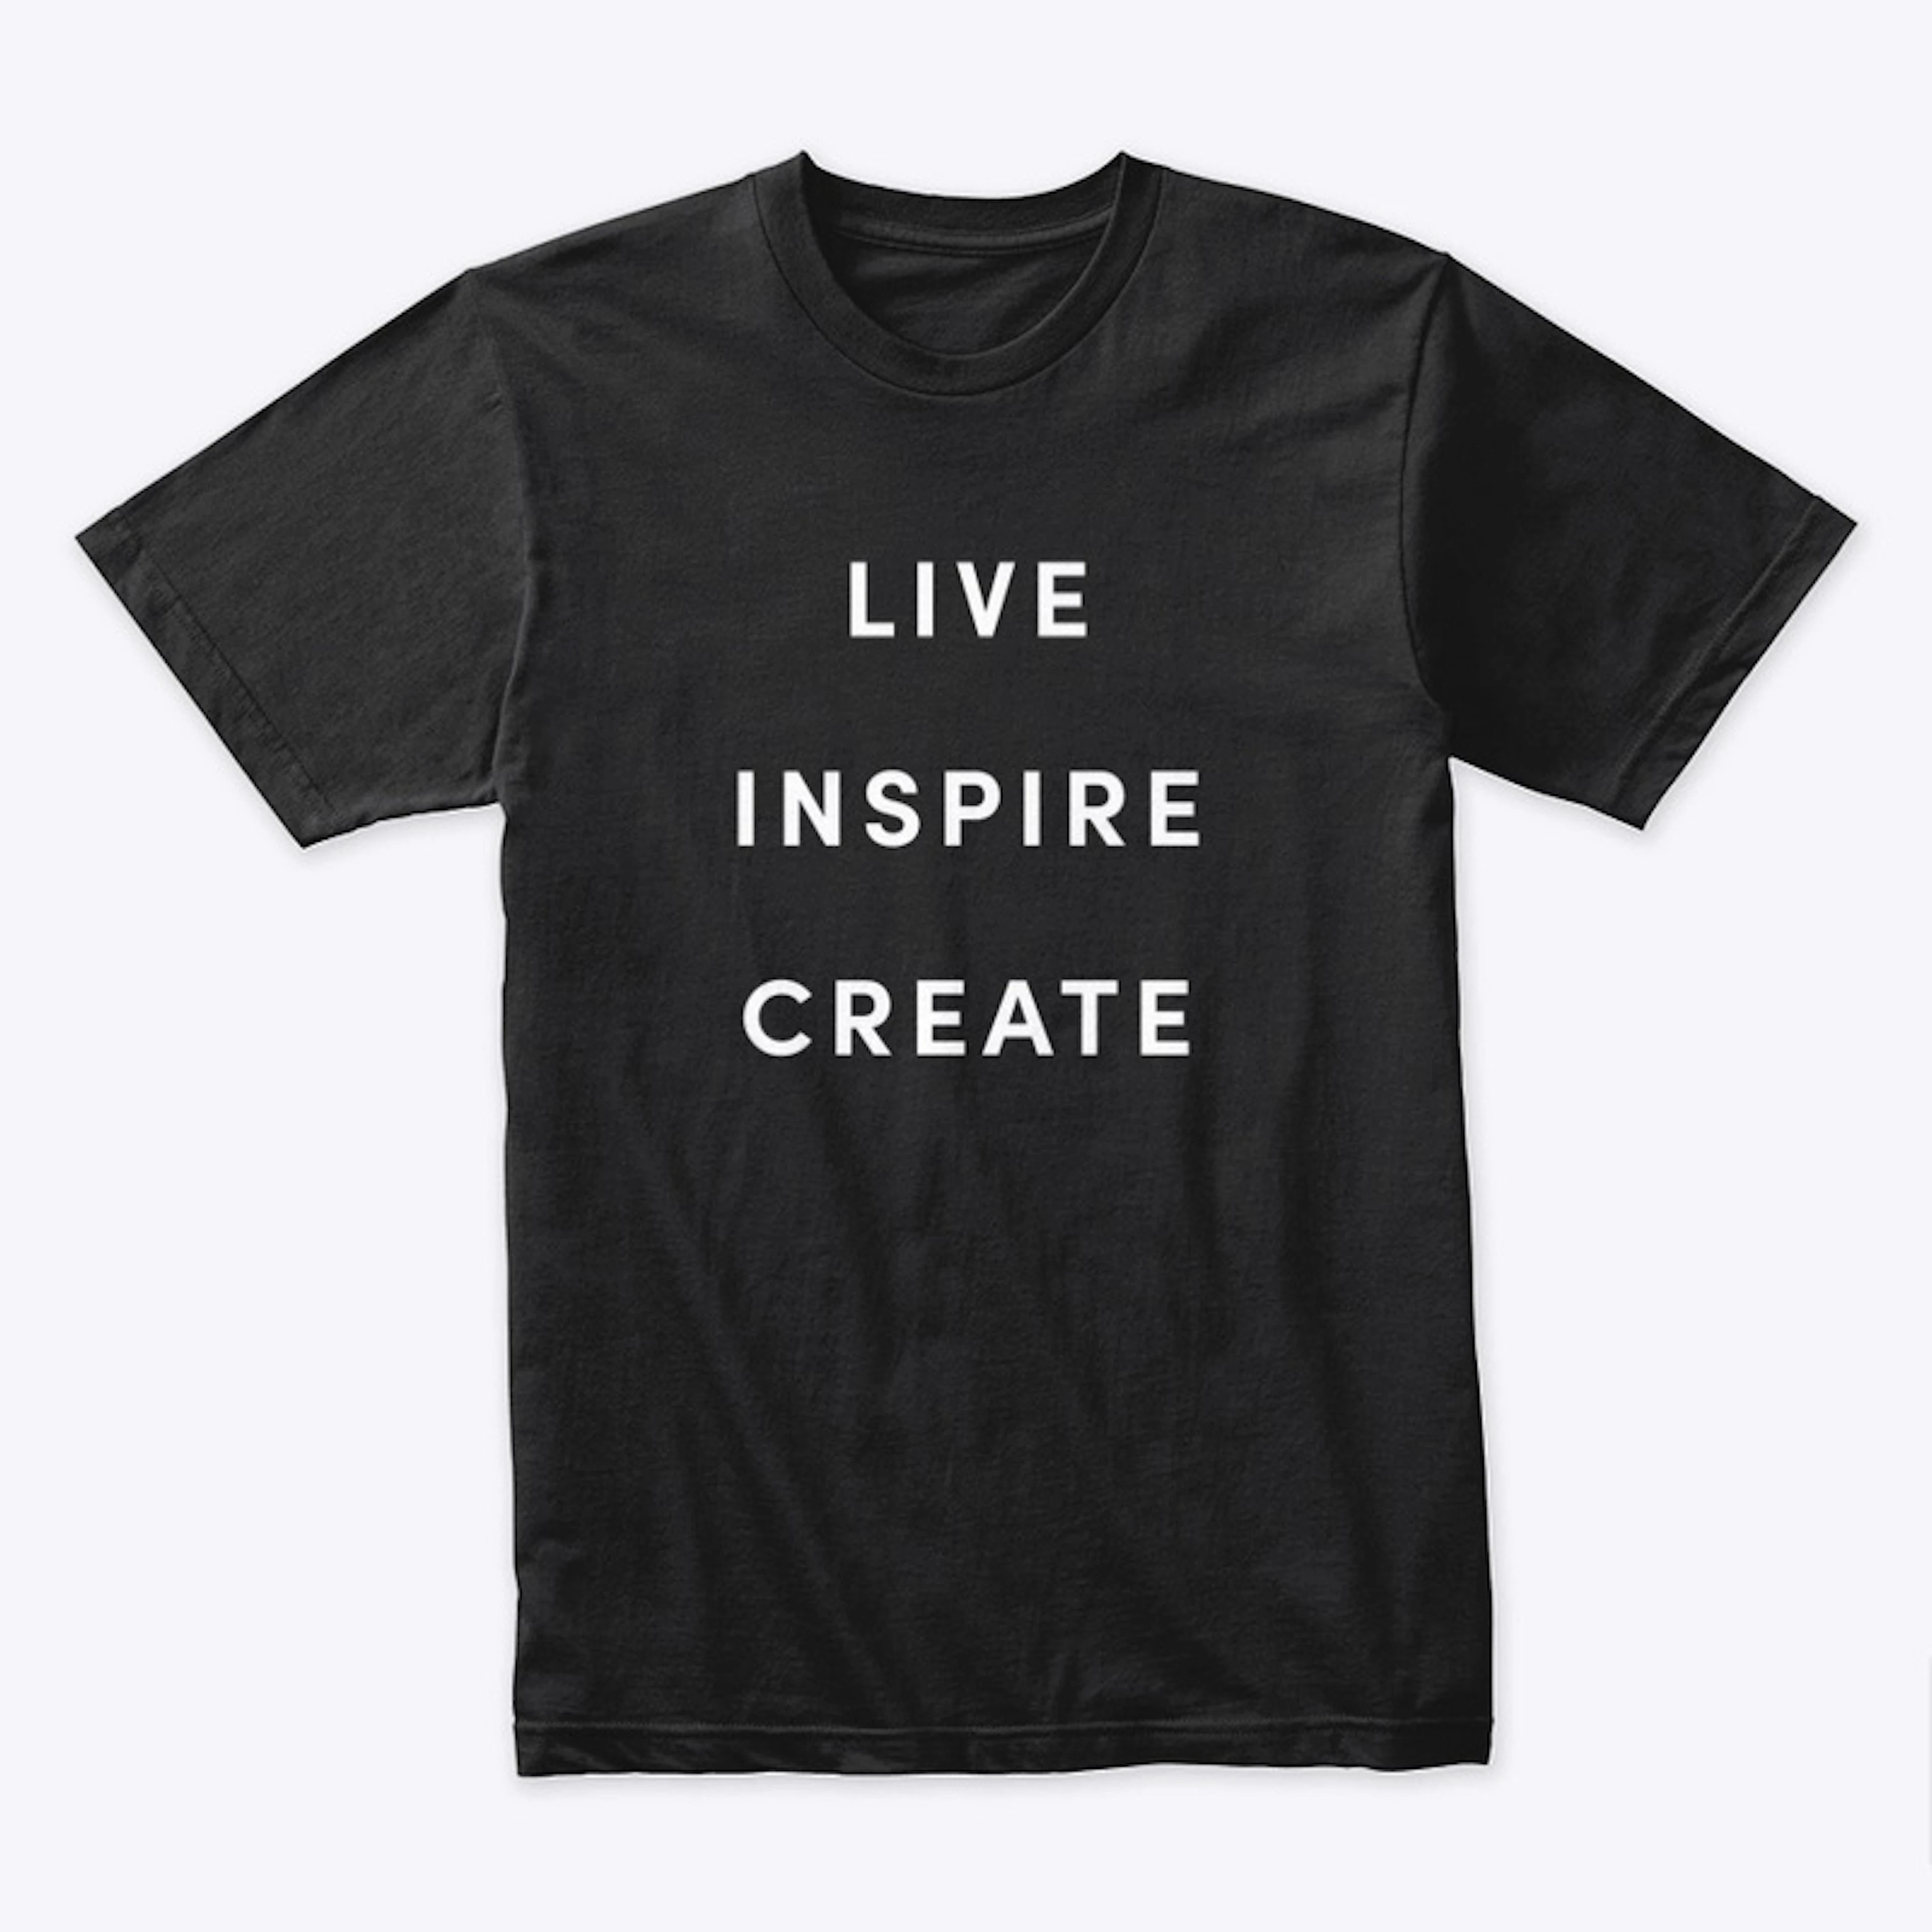 LIVE INSPIRE CREATE Black